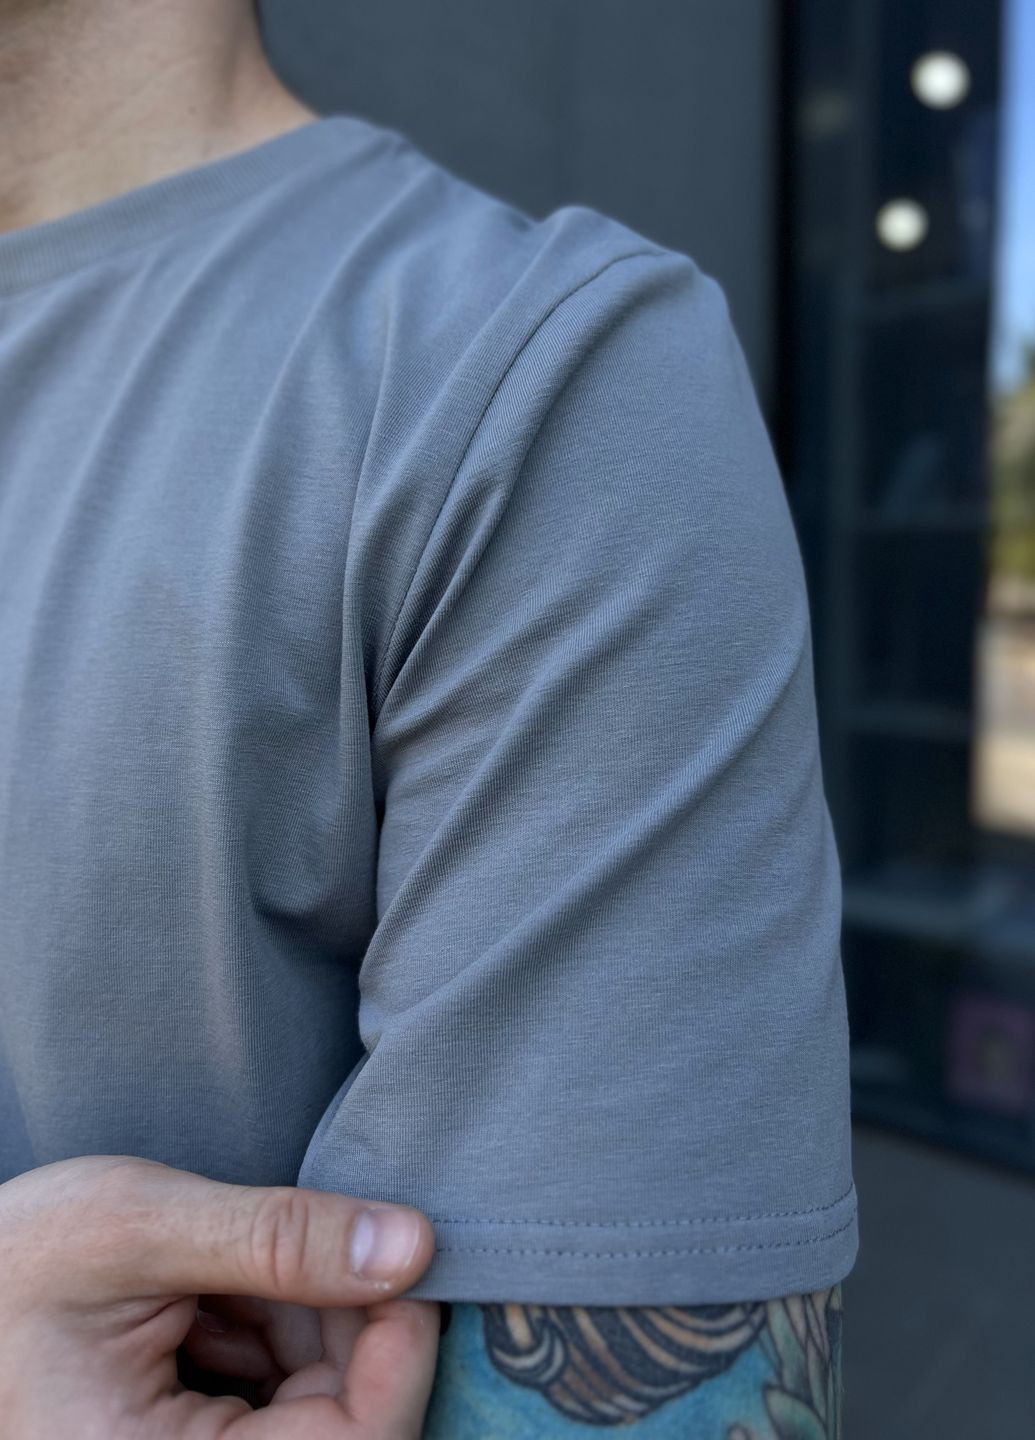 Сіра чоловіча футболка volition з коротким рукавом сіра принт з коротким рукавом Cosy